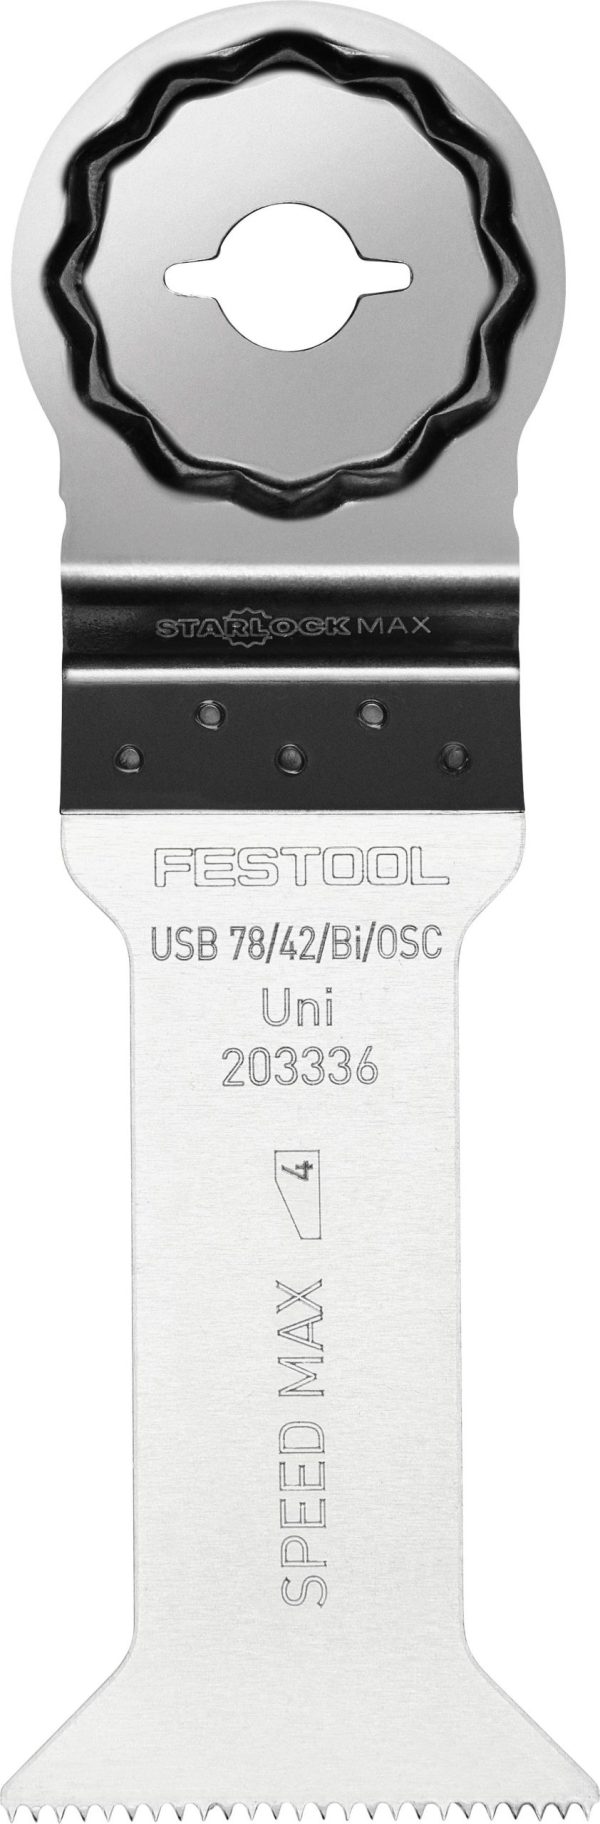 Festool 203336 BLADE USB 78/42/Bi/OSC/5